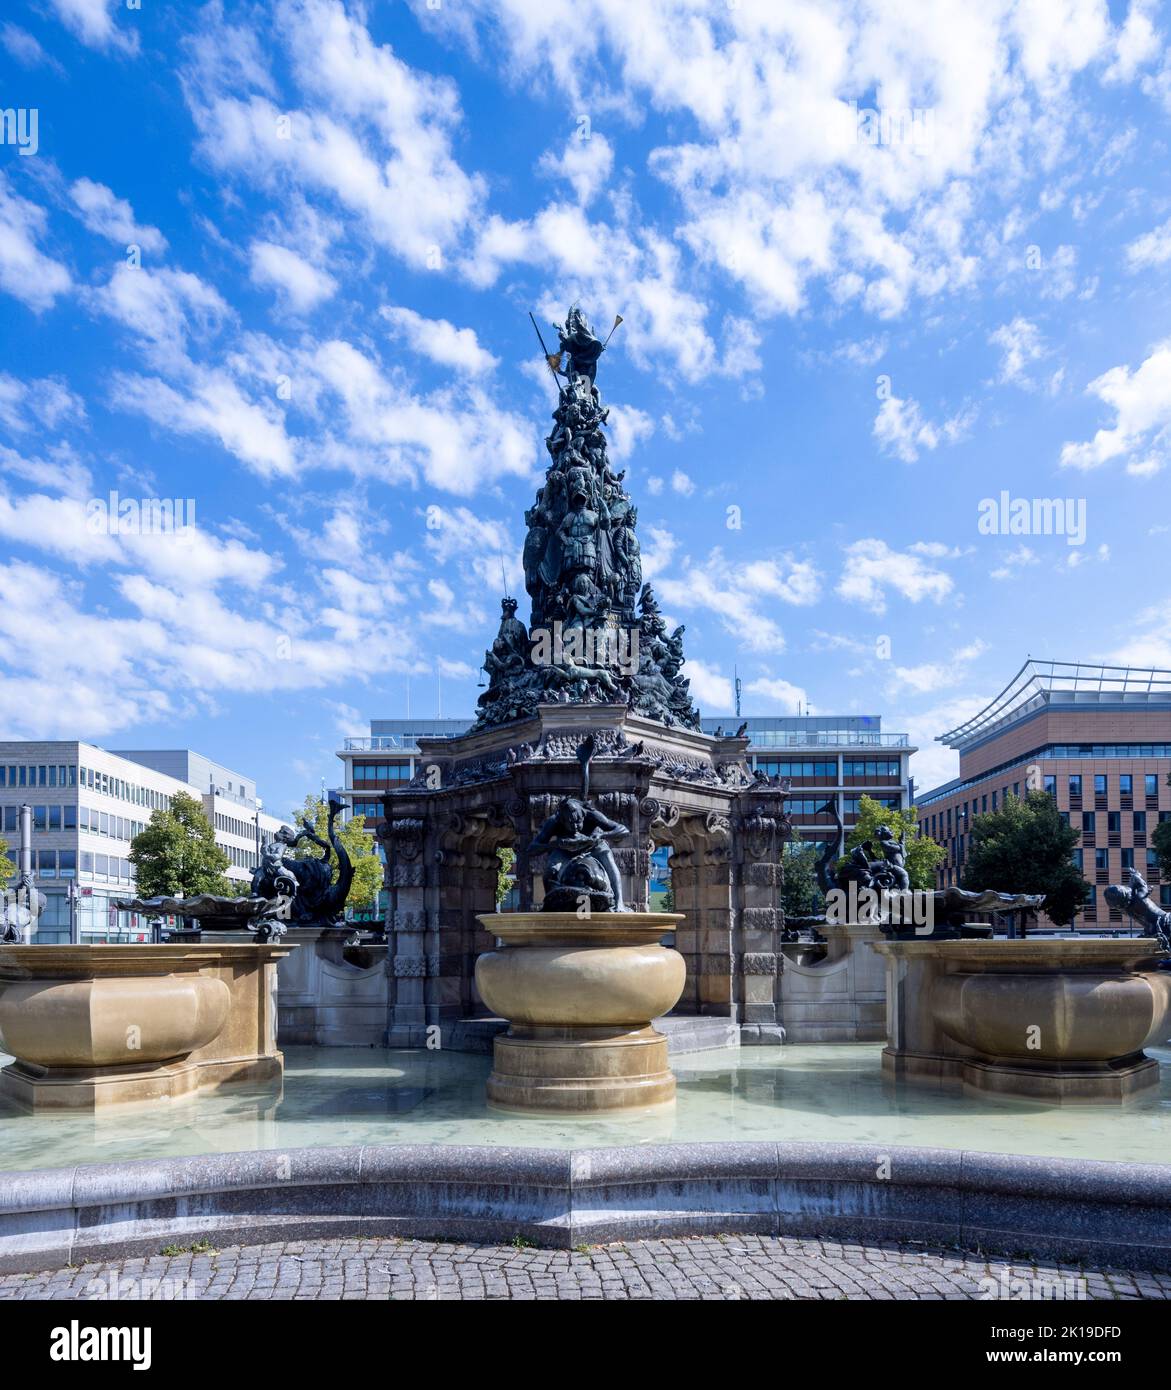 sci-called 'Pyramid' fountain of Gabriel Grupello, Paradeplatz, Mannheim, Germany Stock Photo